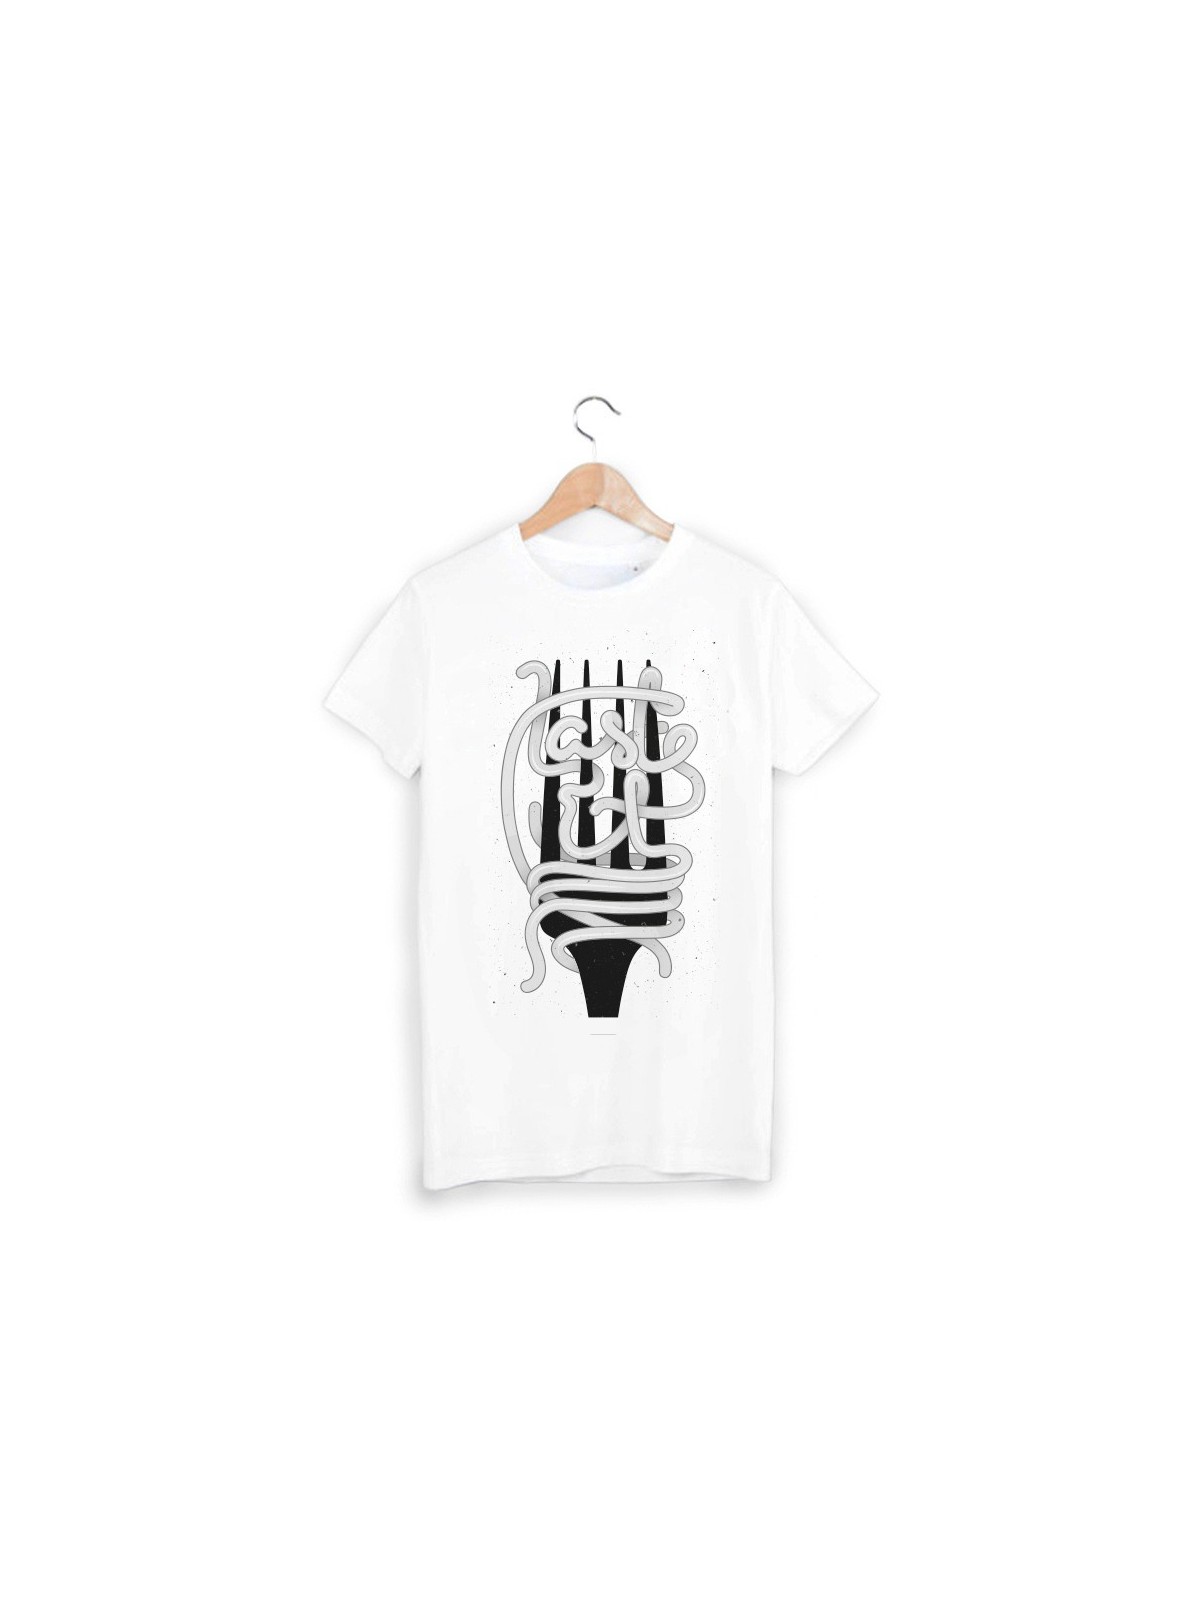 T-Shirt art fourchette ref 944